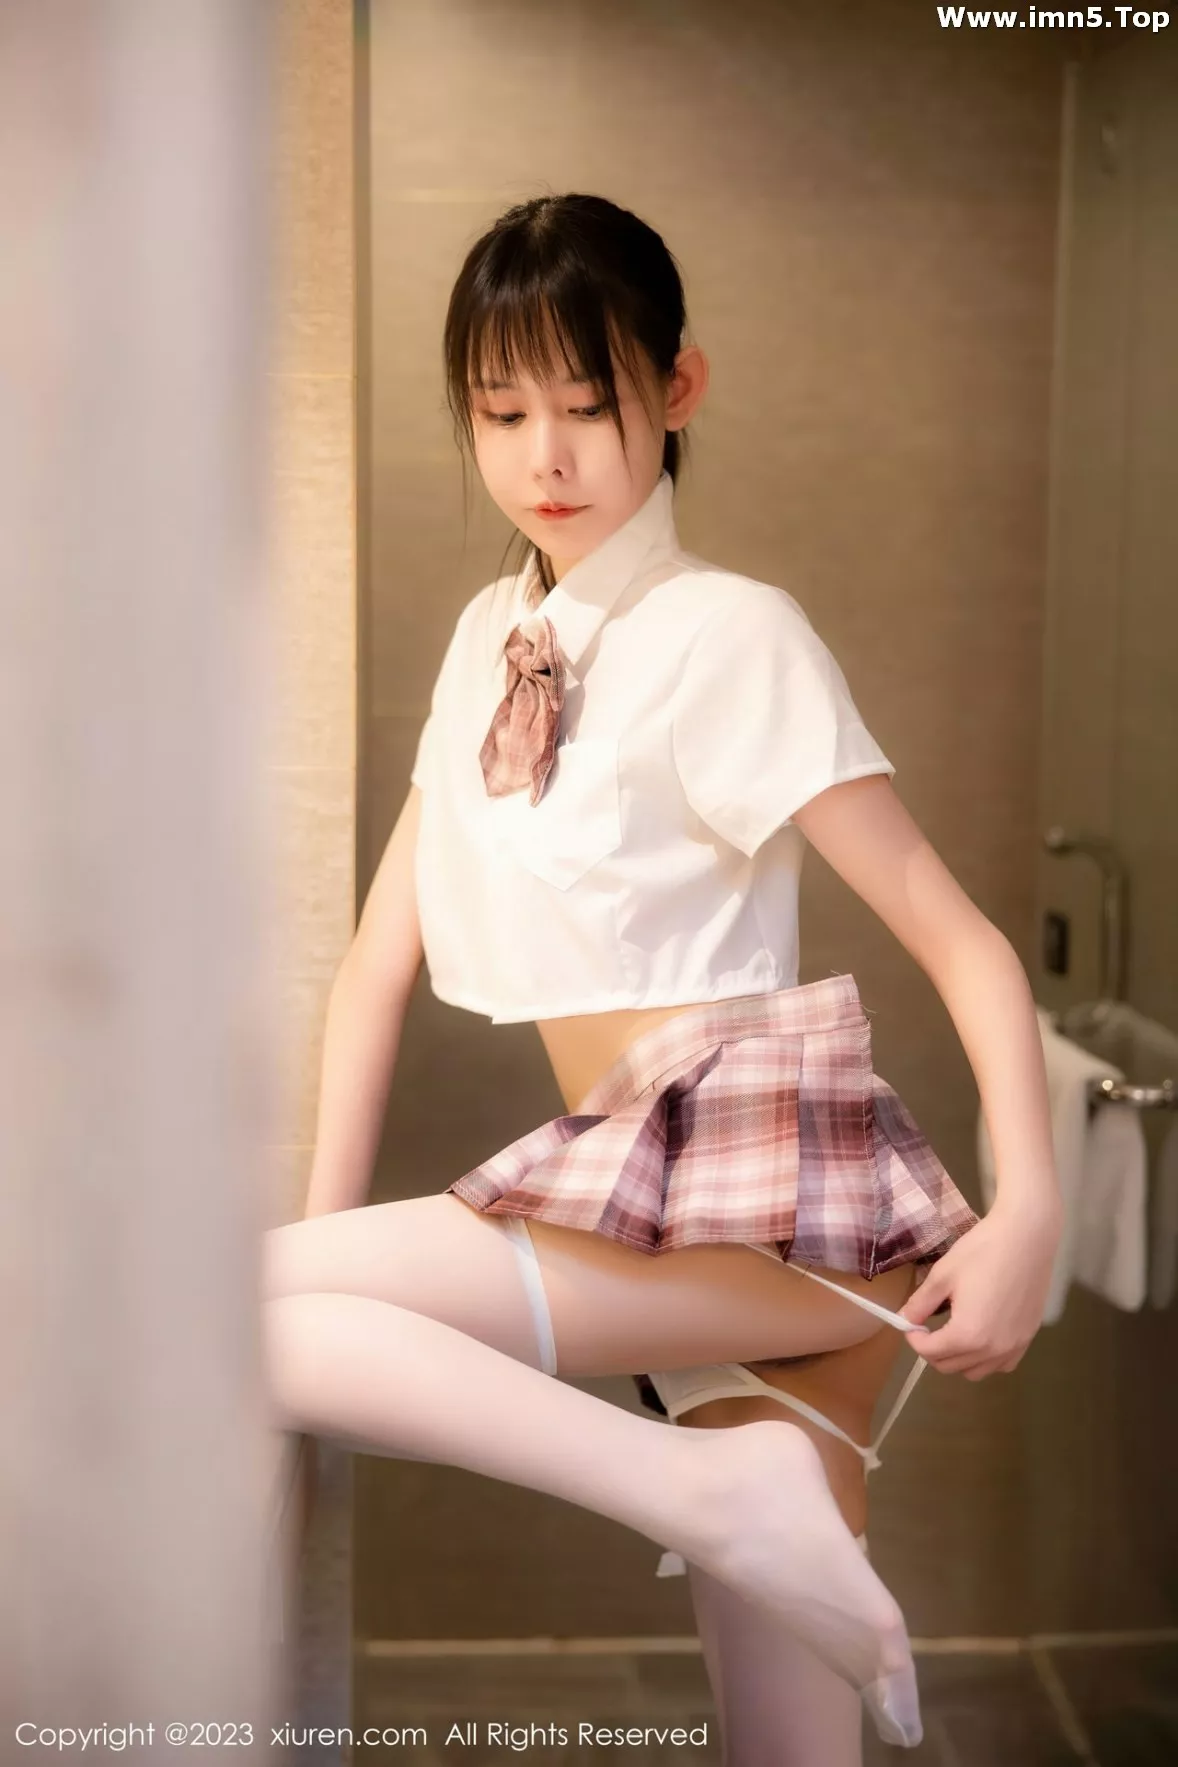 [XiuRen秀人网]No.6200_新人模特甜佳佳浴室白色短款上衣配格子裙秀曼妙身姿迷人写真83P